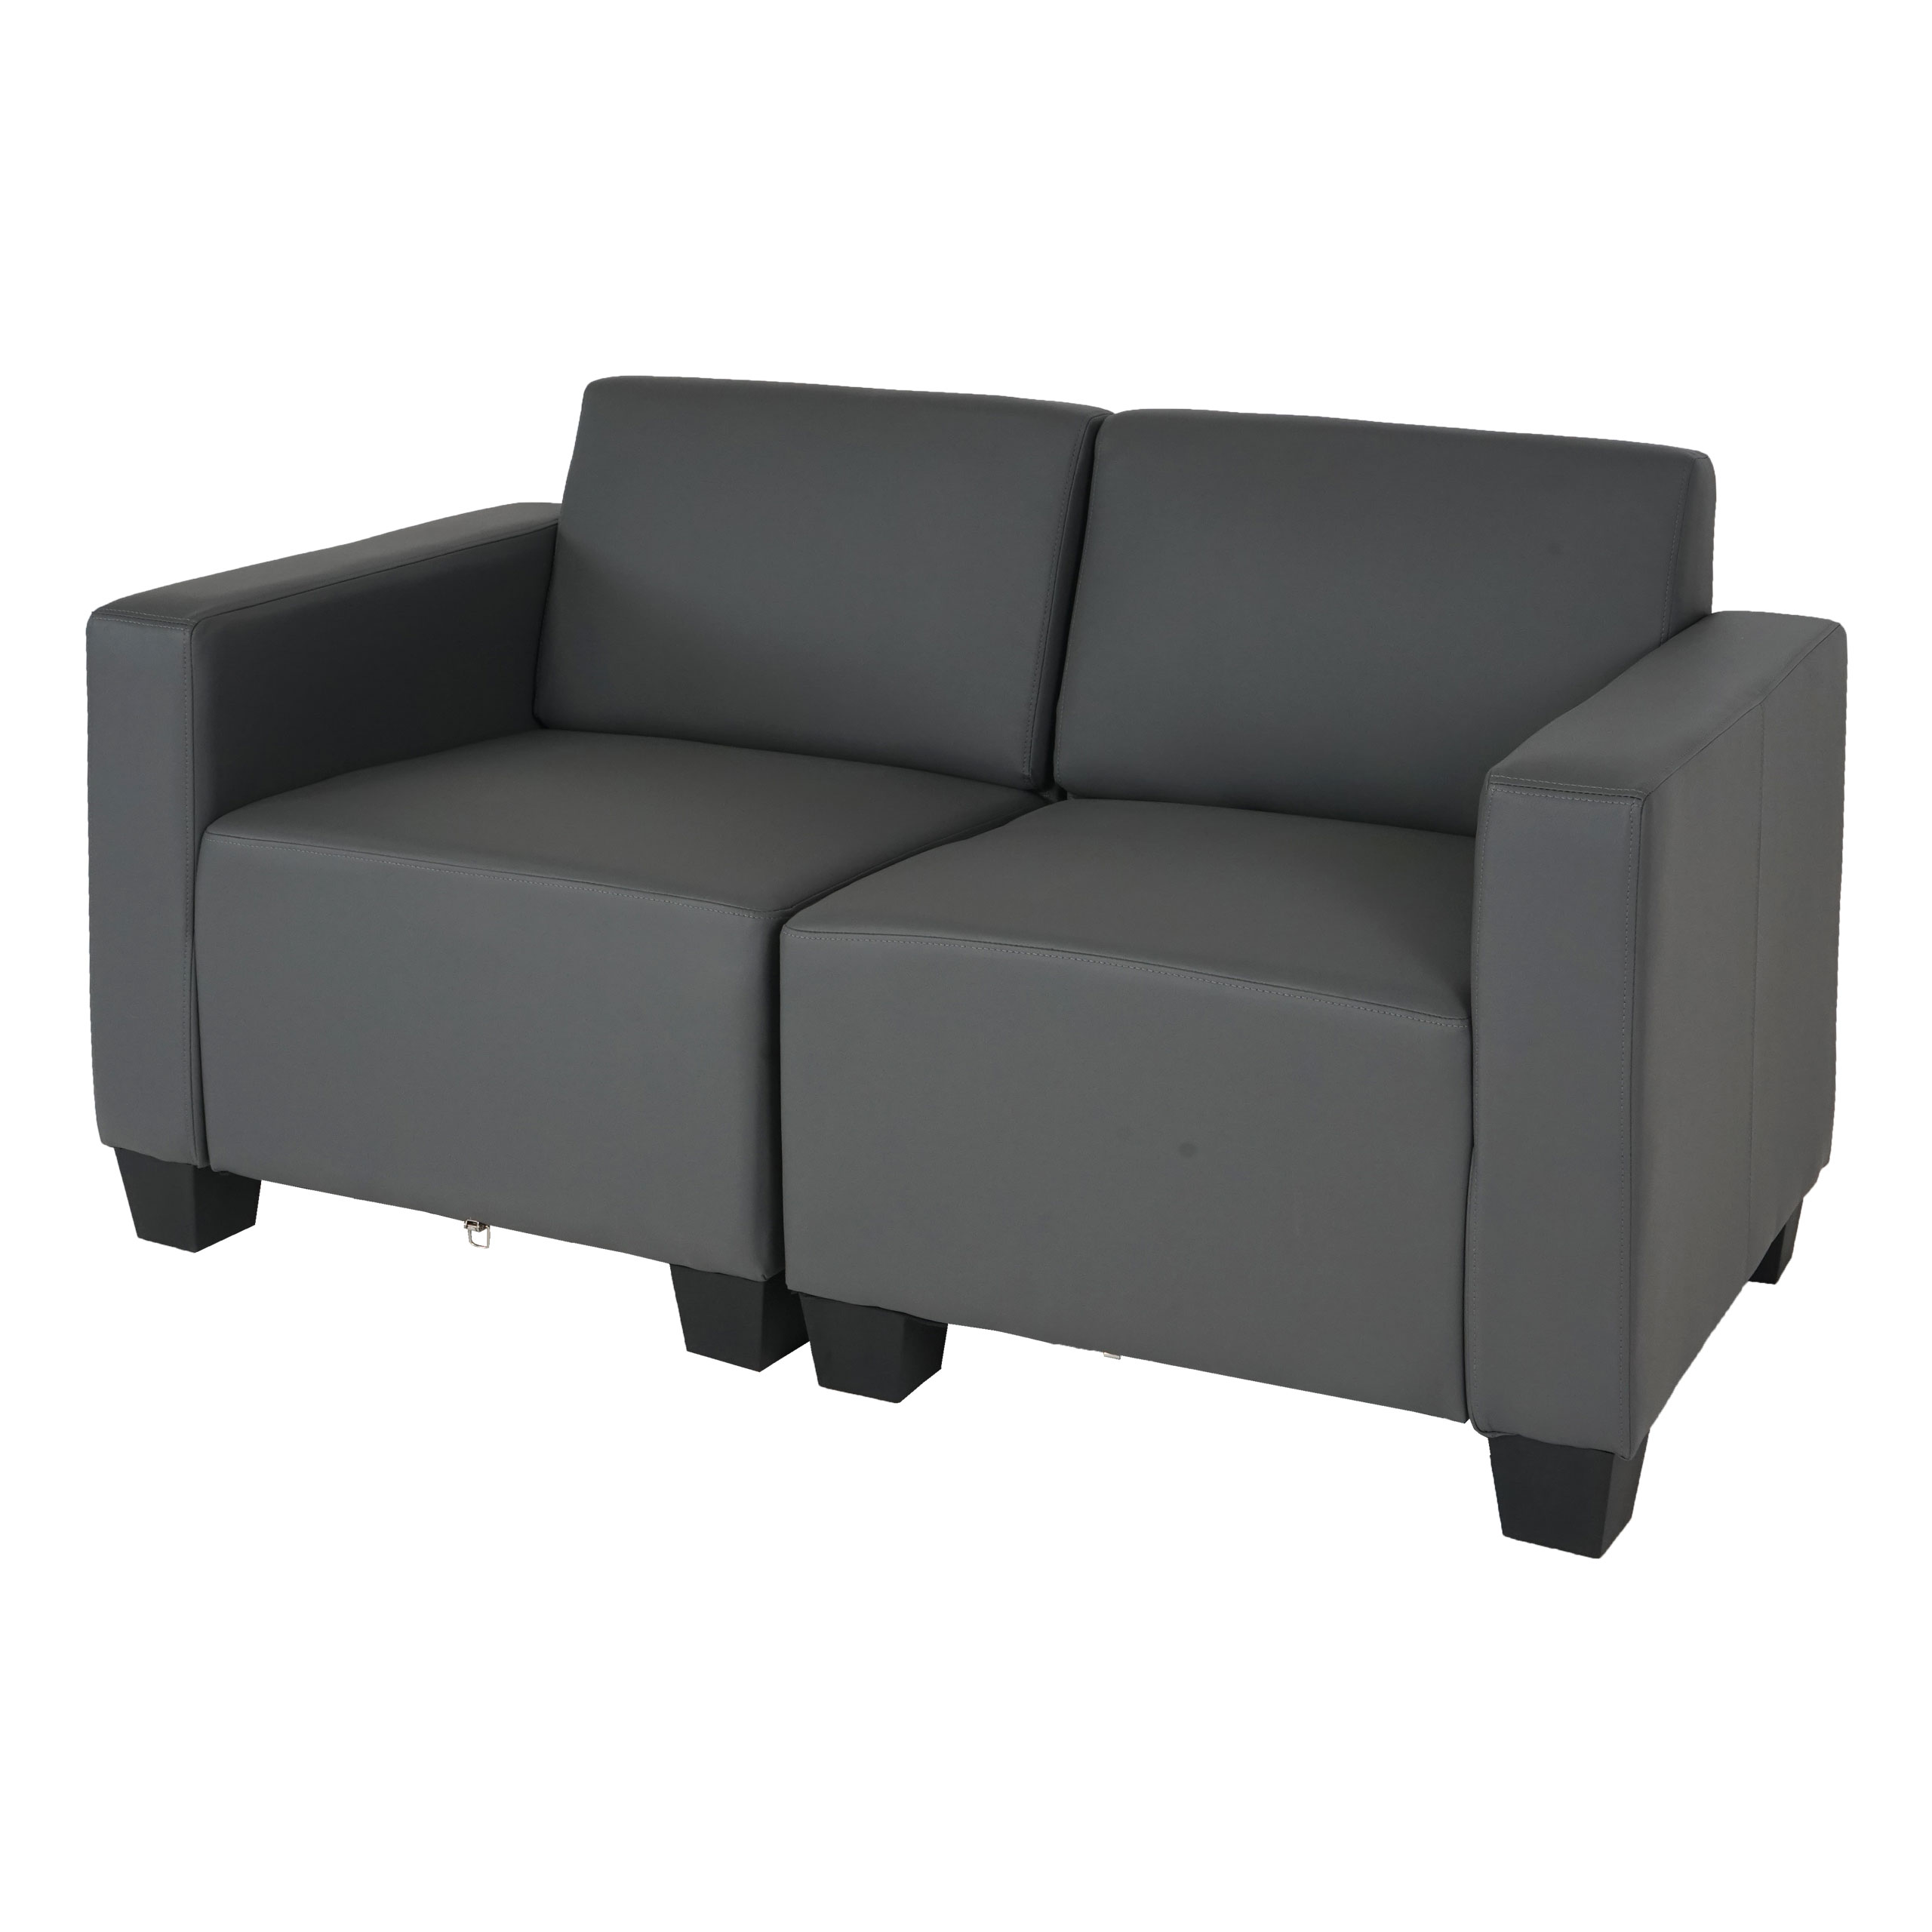 Modular Zweisitzer Sofa Couch Lyon Kunstleder | eBay